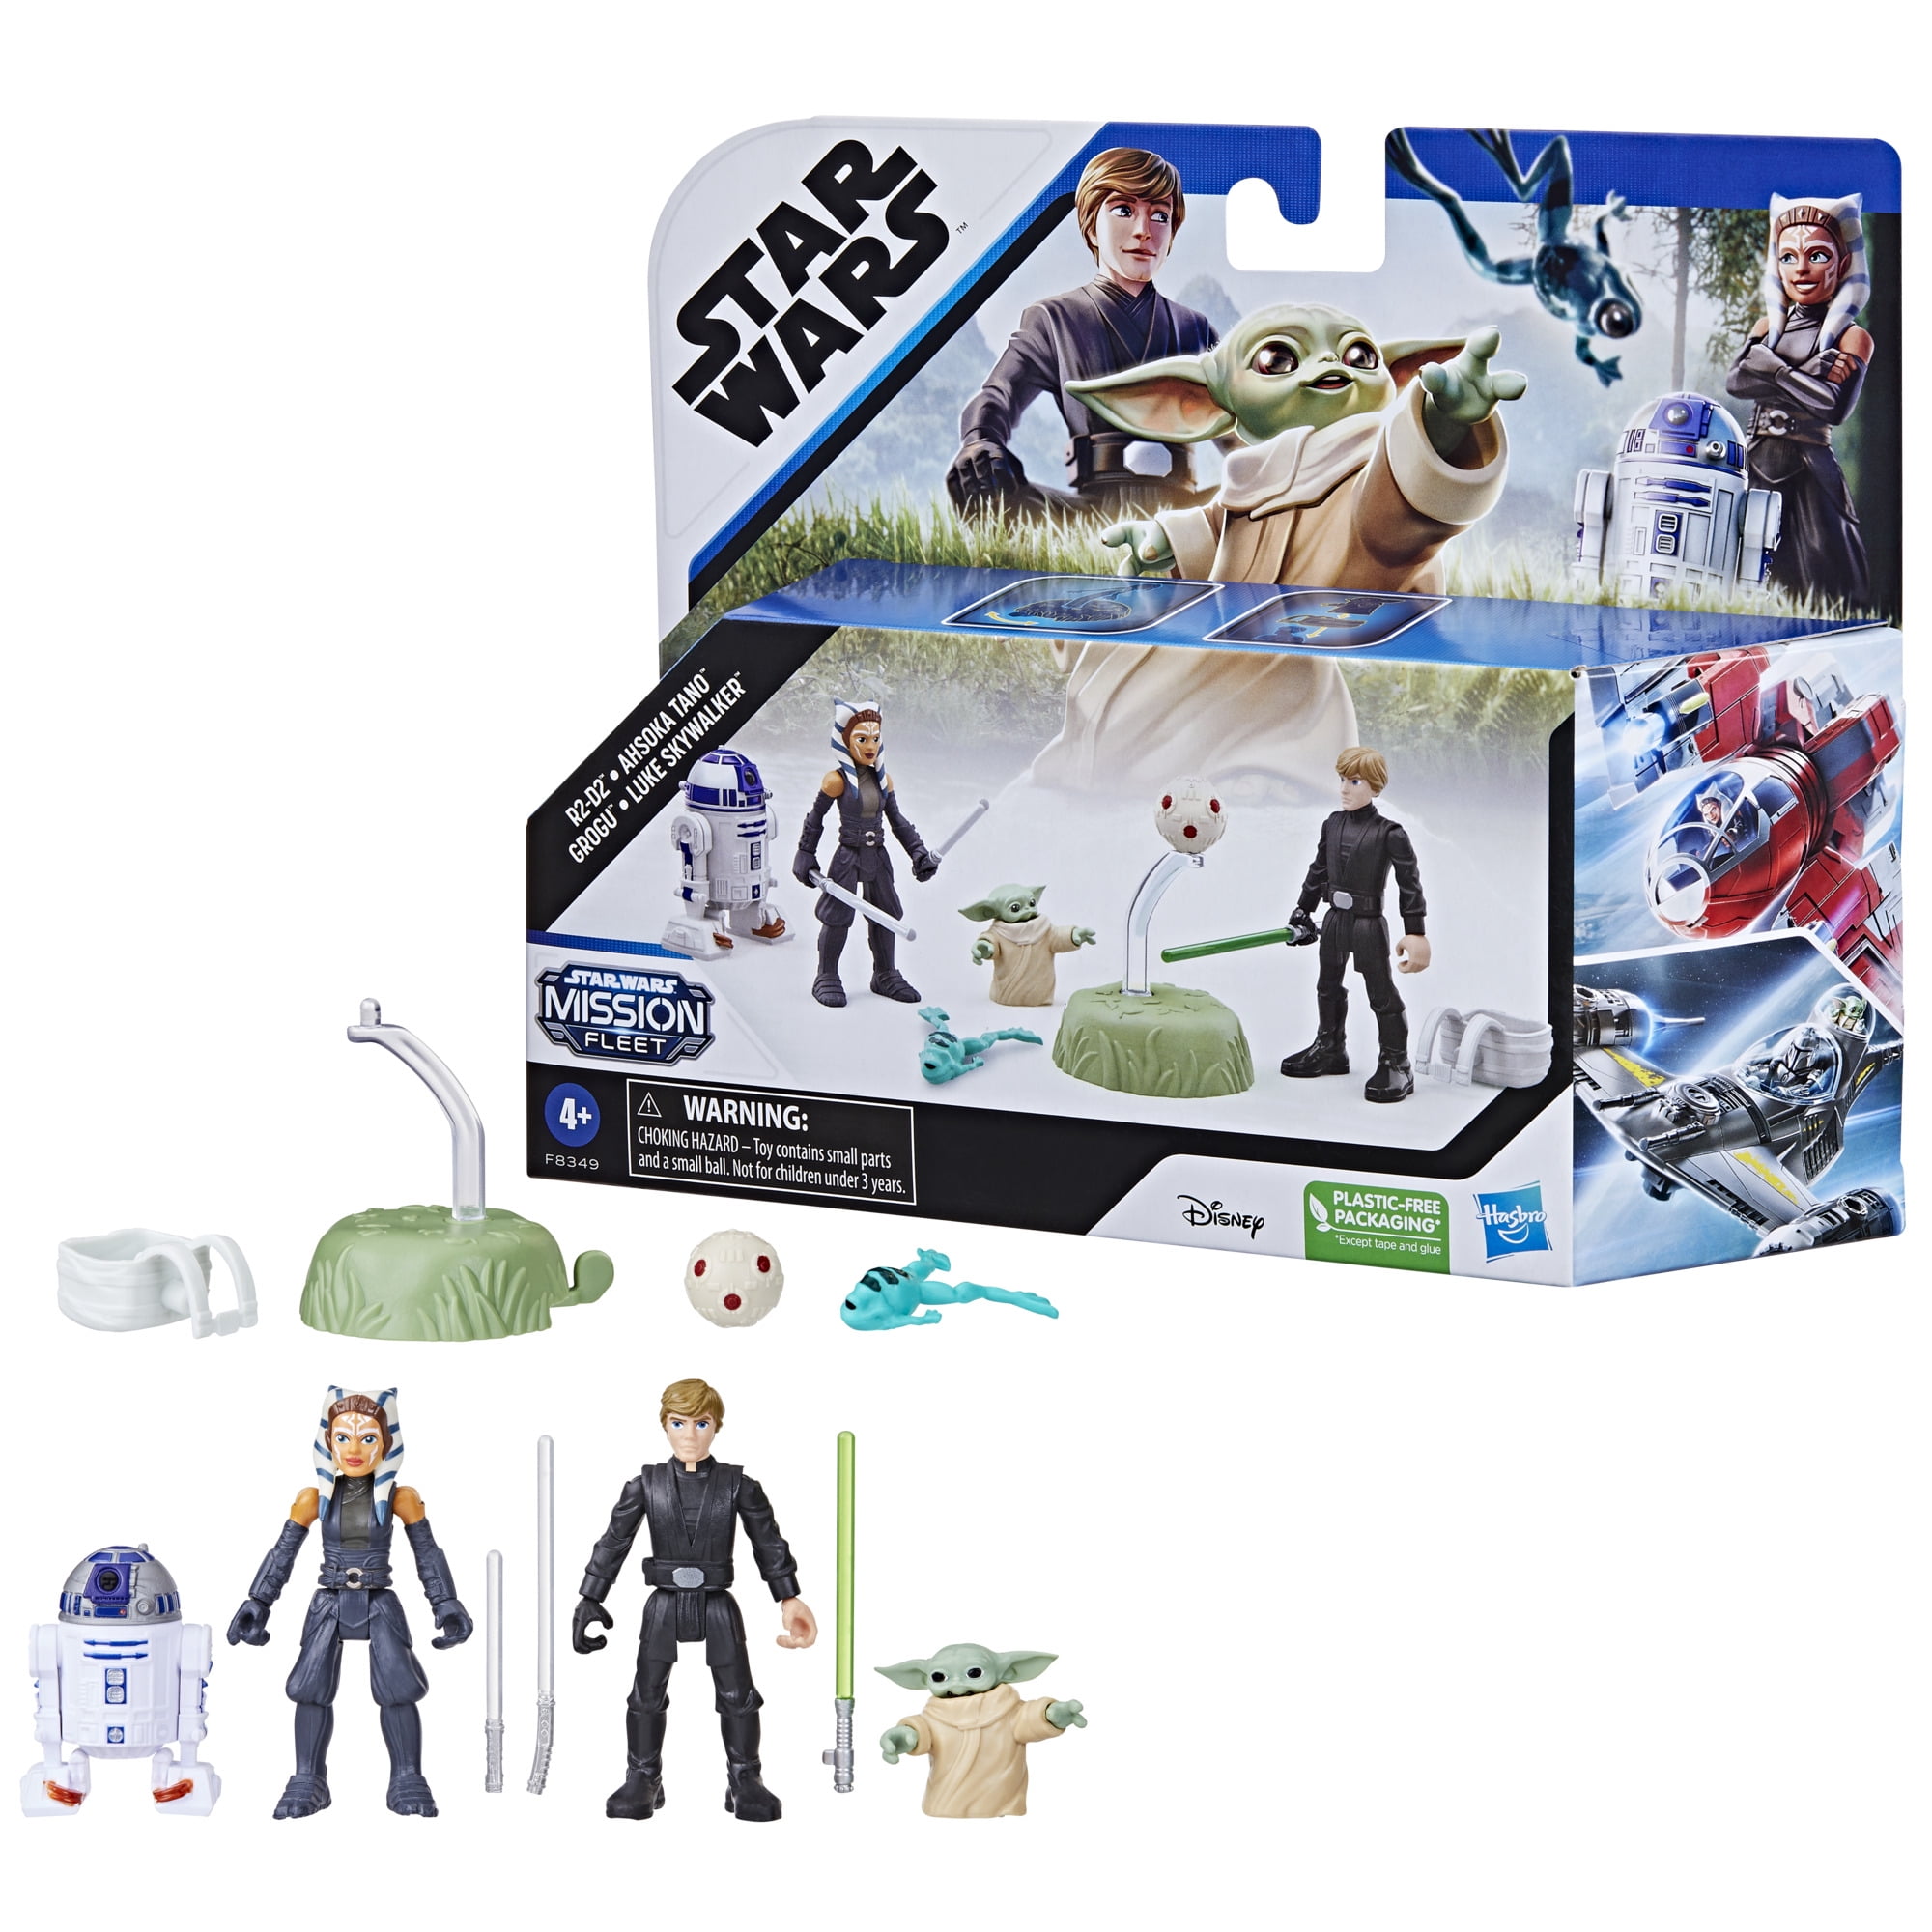 Promotion Star Wars - Hasbro Figurines Grogu #4 - Star Wars, 2